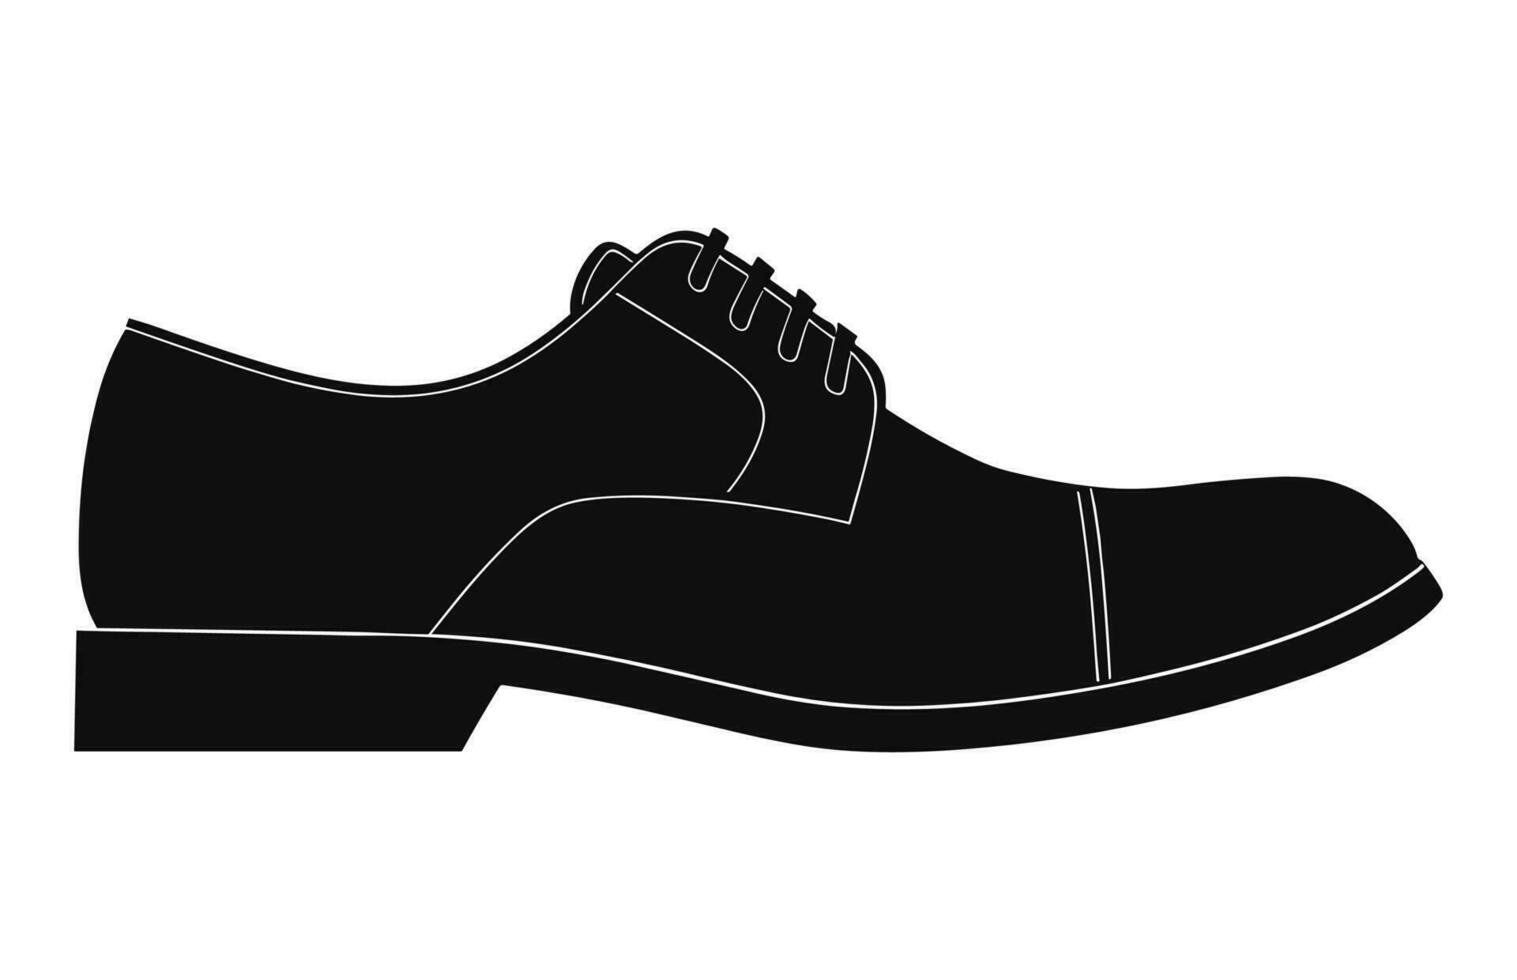 un masculino zapato negro silueta vector gratis